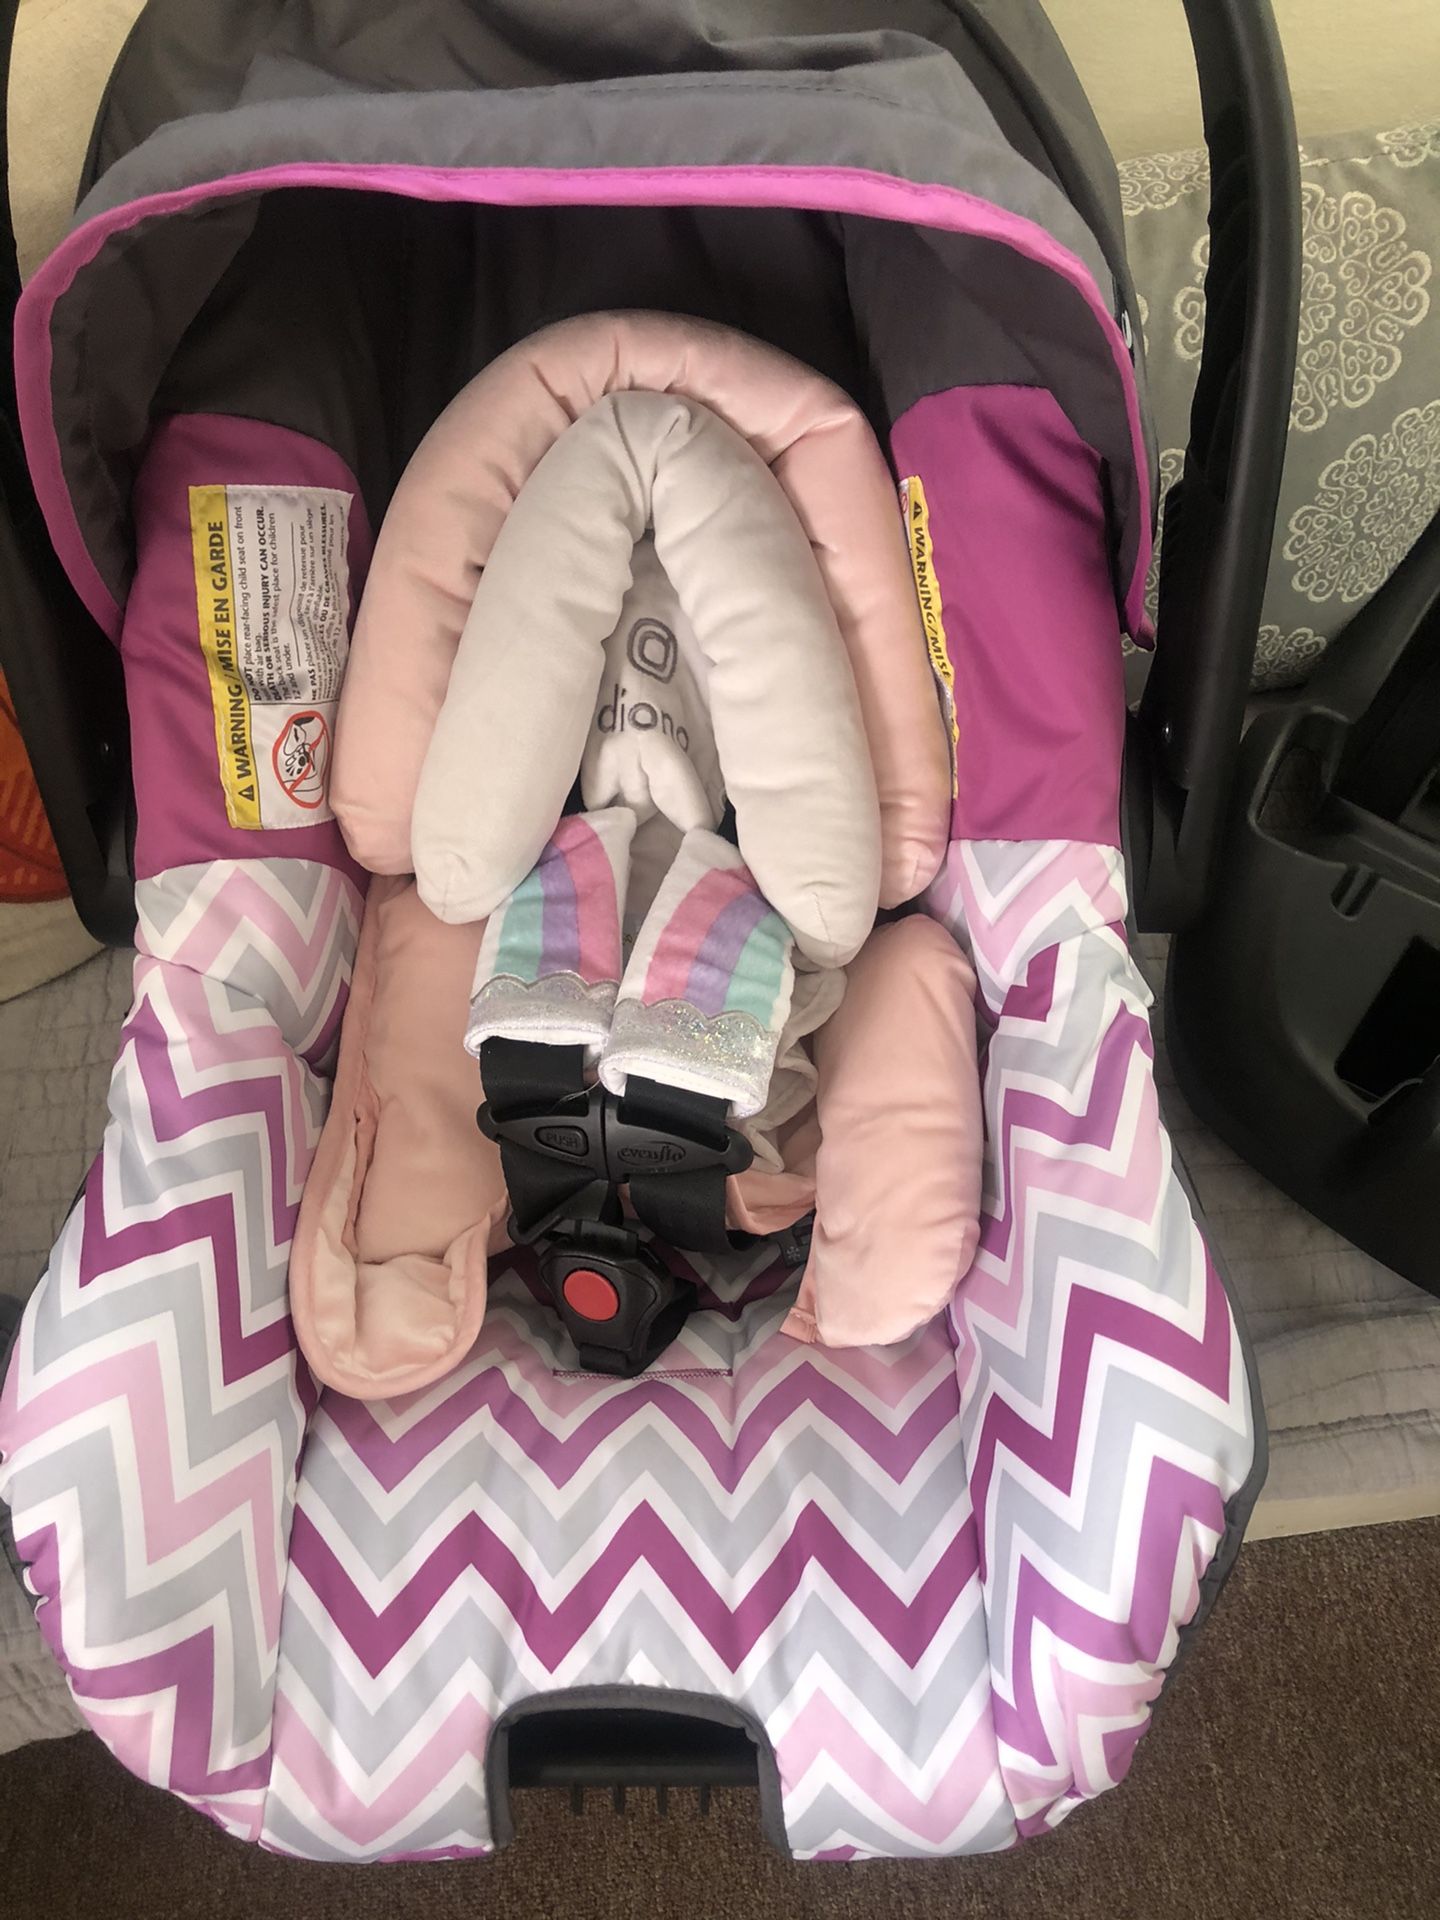 Evenflo baby car seat